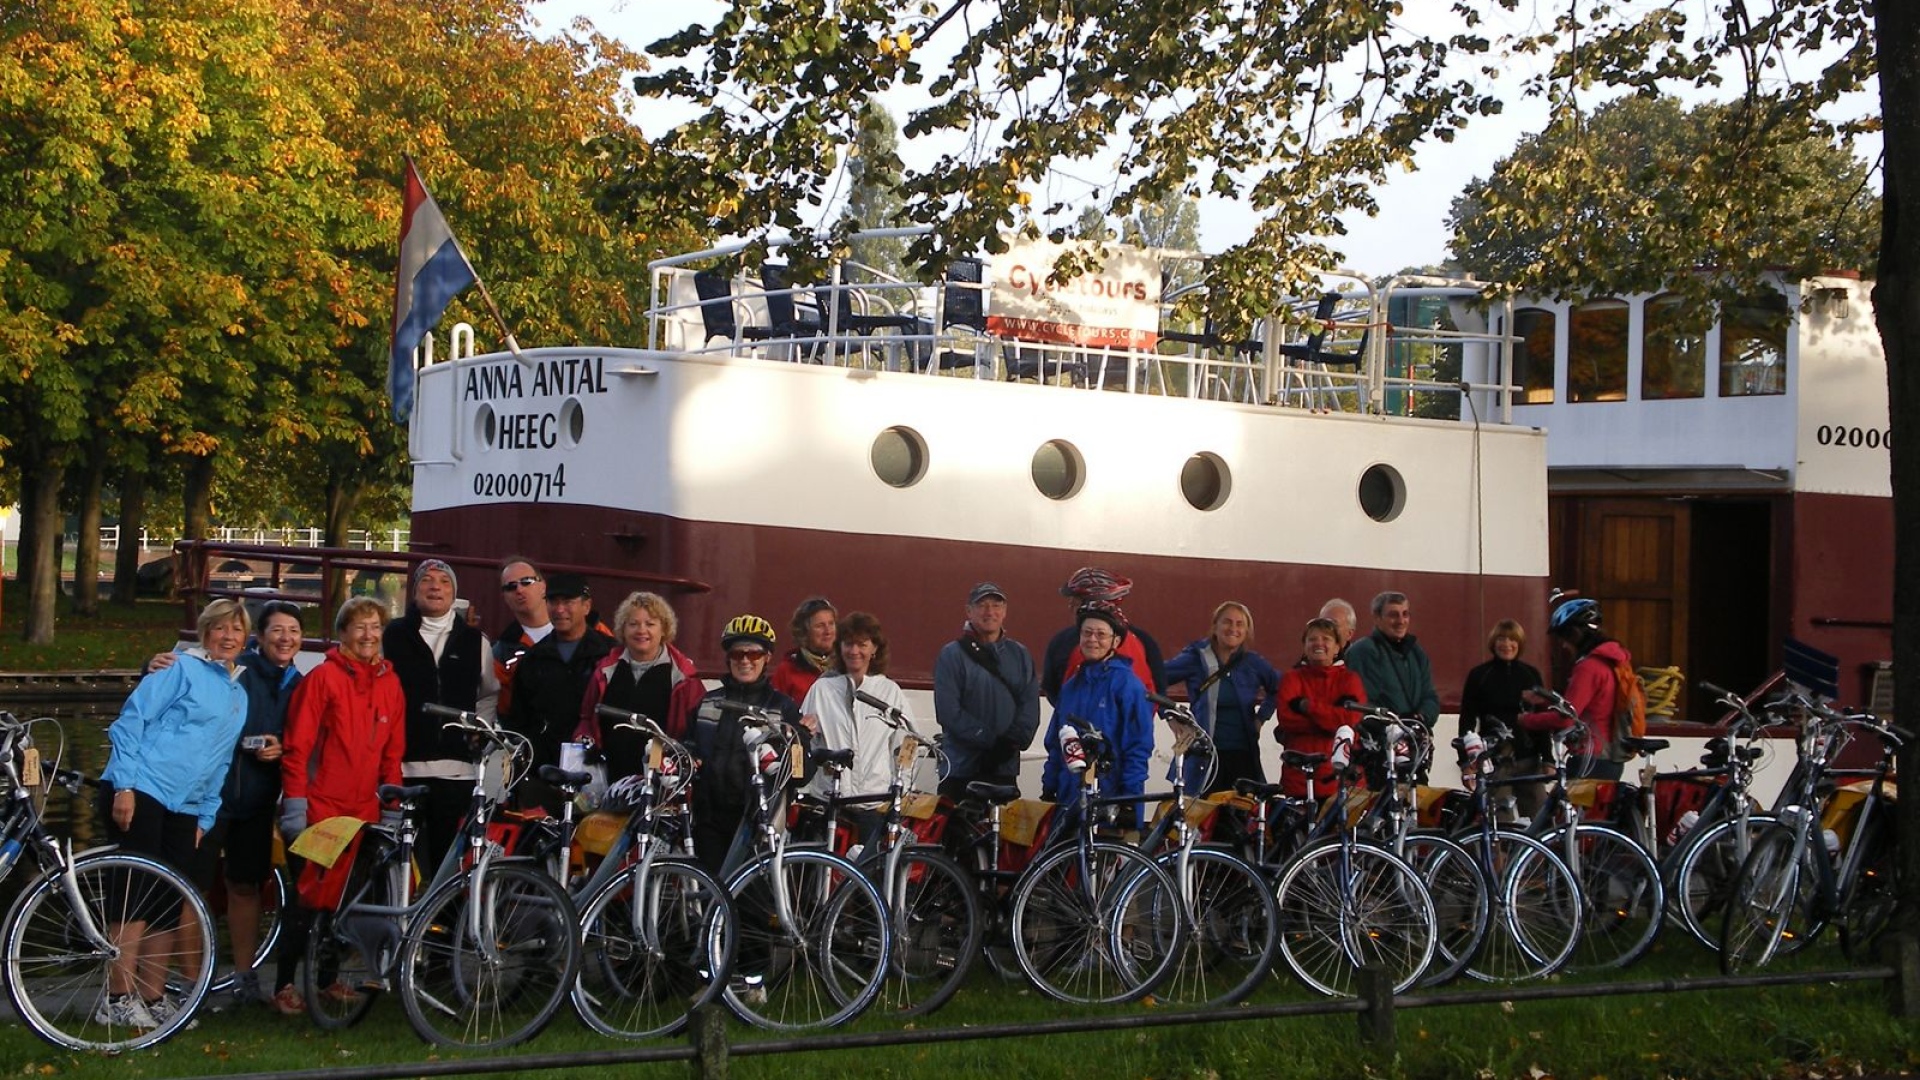 Le groupe de cyclotouristes devant la Anna Antal en Hollande